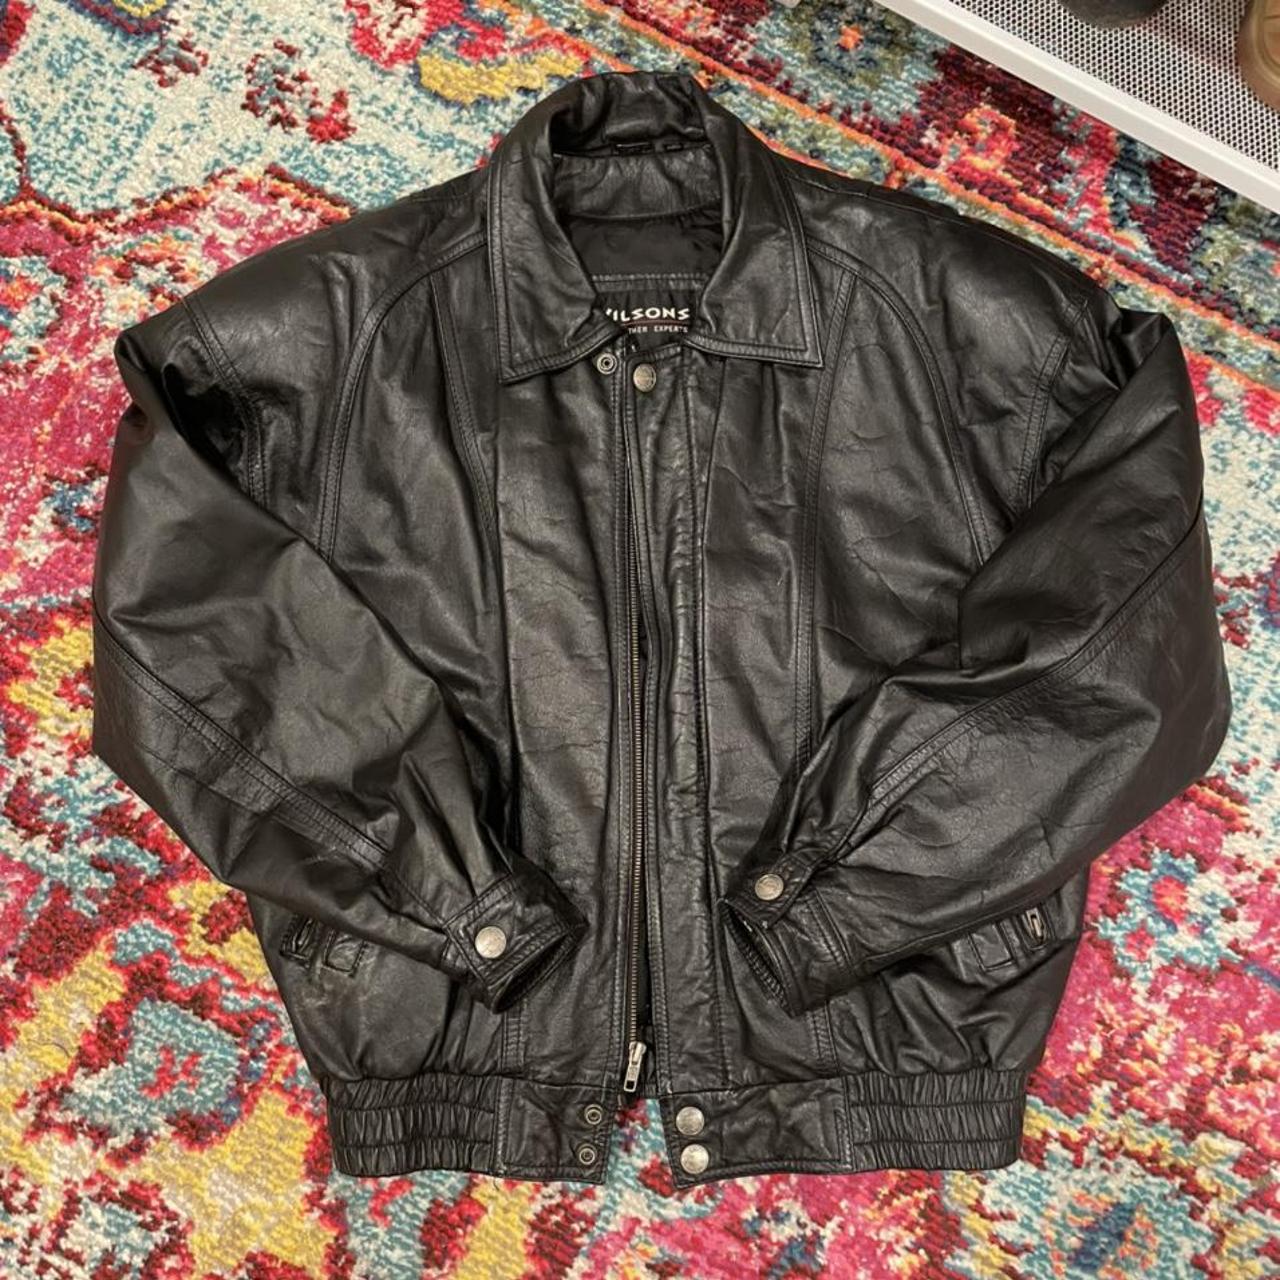 REPOP !! Vintage Wilson’s leather jacket PLEASE USE... - Depop